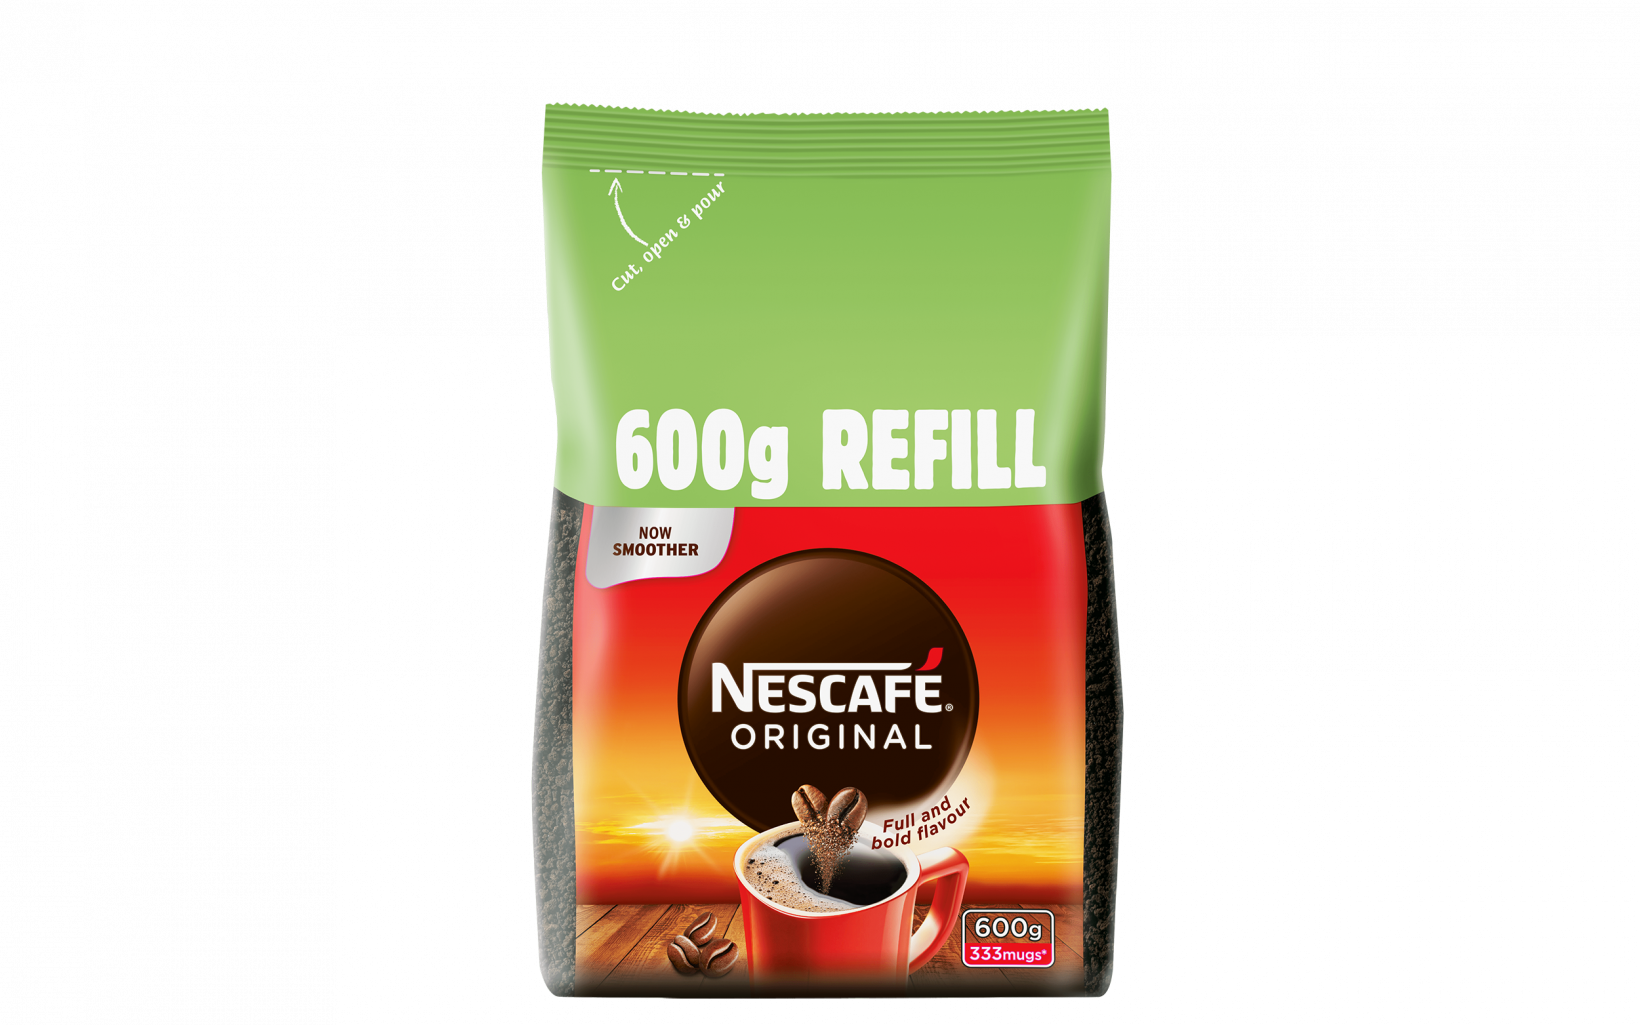 54462 Nescafe Original 600g Refill Front Edit